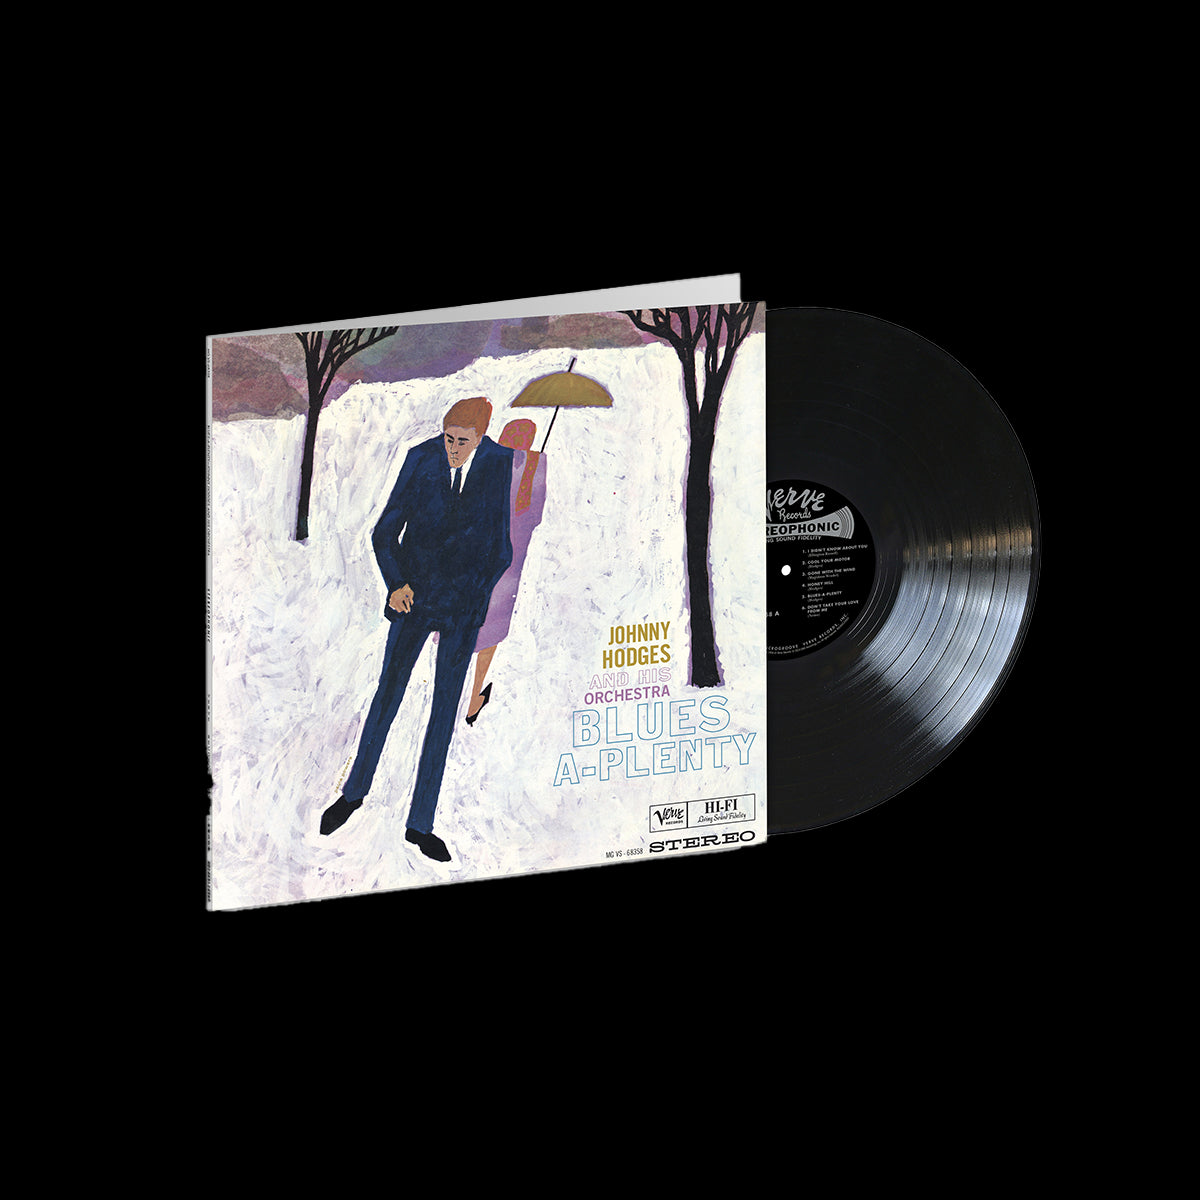 Johnny Hodges And His Orchestra - Blues-A-Plenty (Acoustic Sounds): Vinyl LP